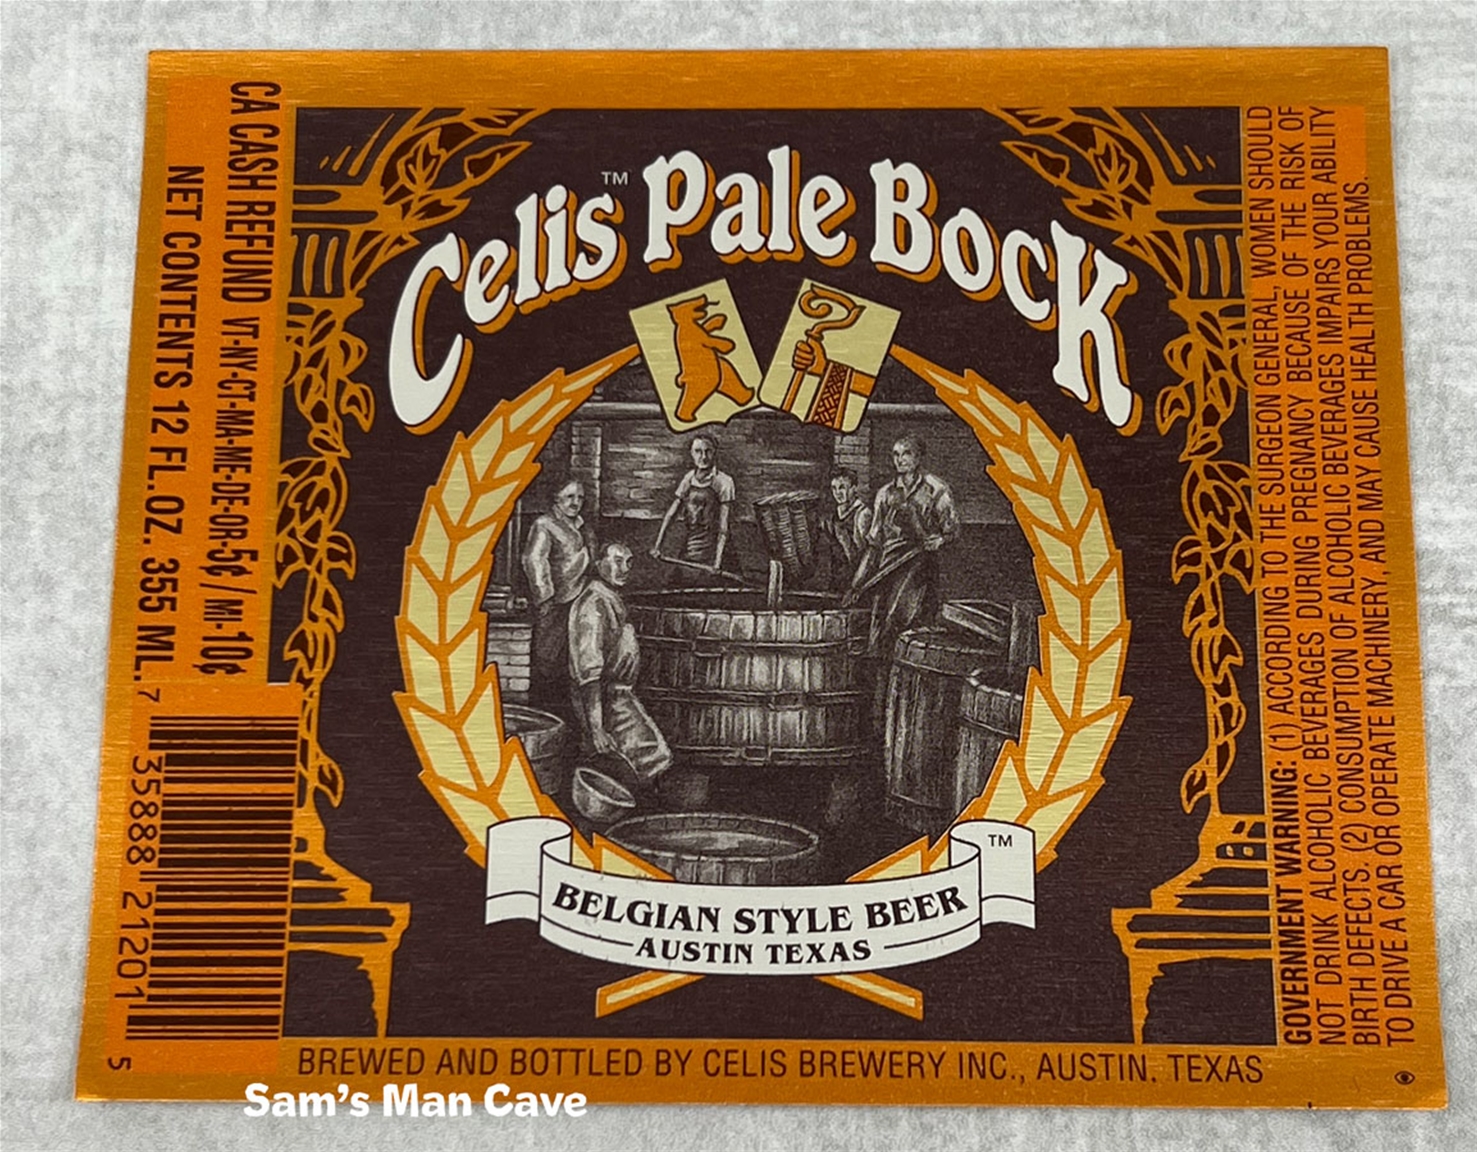 Celis Pale Bock Beer Label